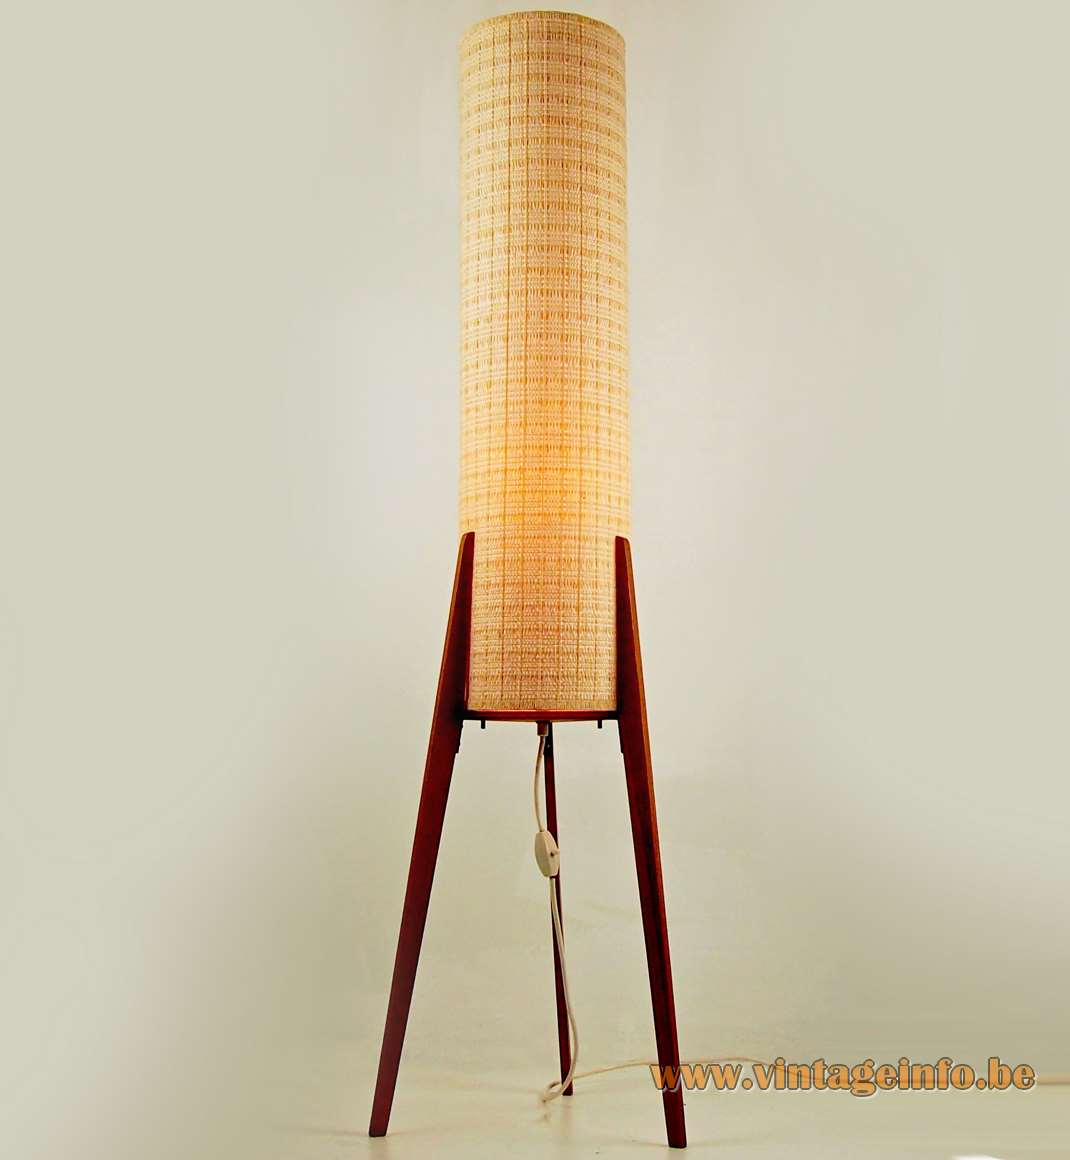 Leclaire & Schäfer rocket floor lamp pine wood tripod legs fabric tubular lampshade 1960s Germany E27 socket